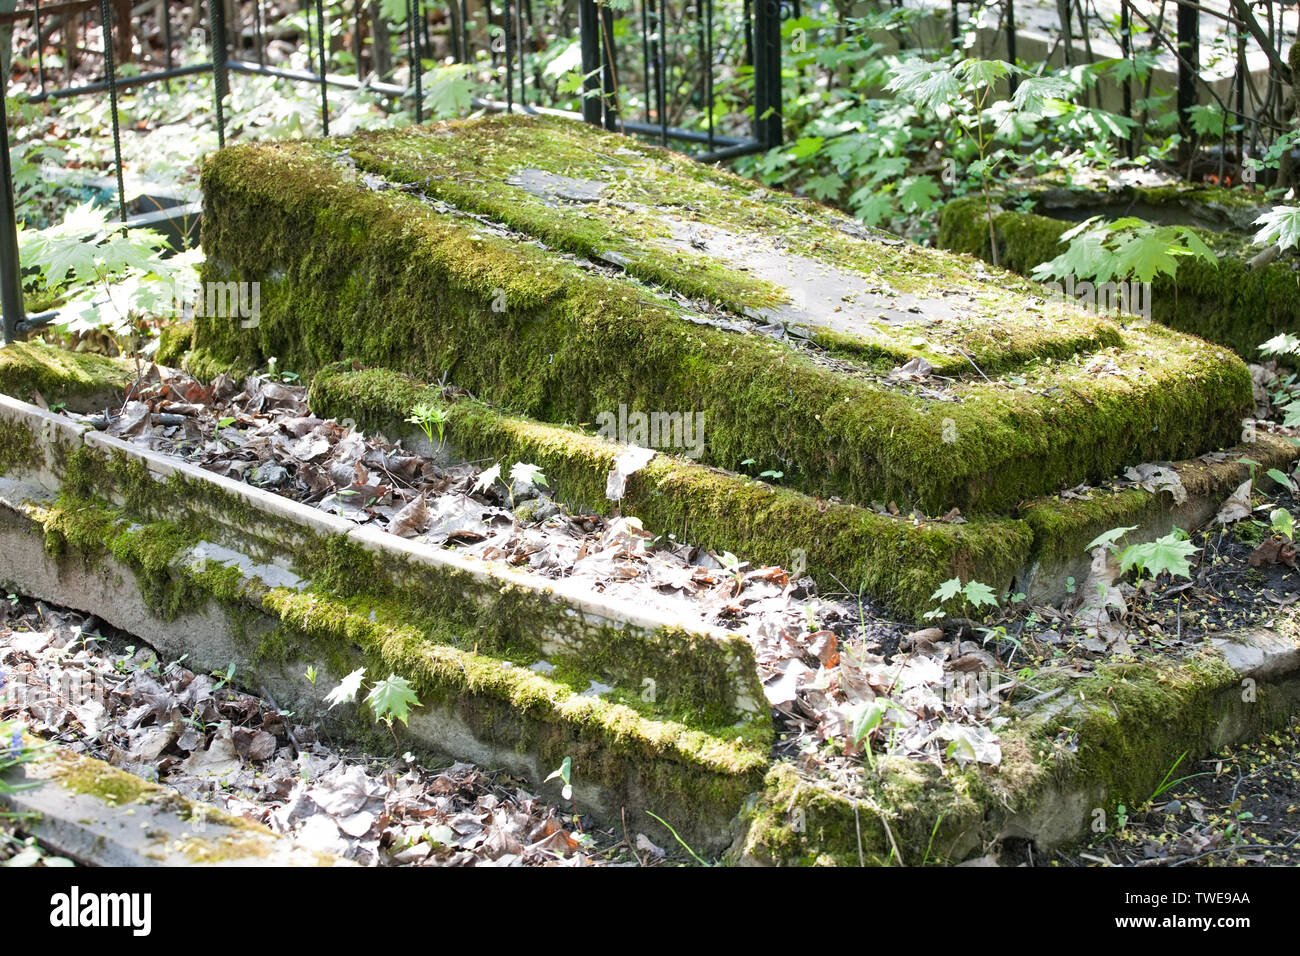 Cementerio tumba monumento de piedra cubiertas de musgo closeup vista sobre fondo exterior Foto de stock